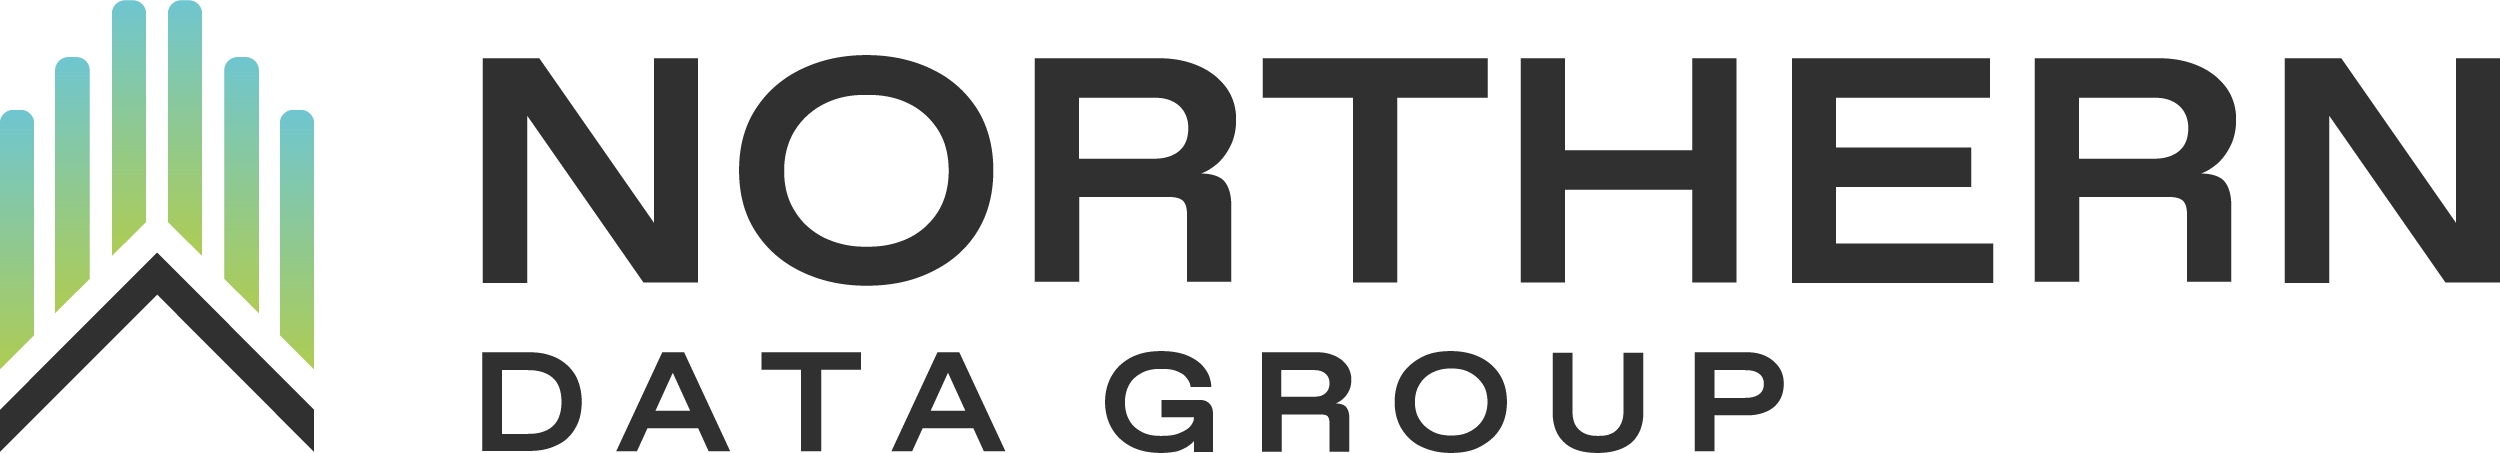 Northern Data Group - New Logo - 1